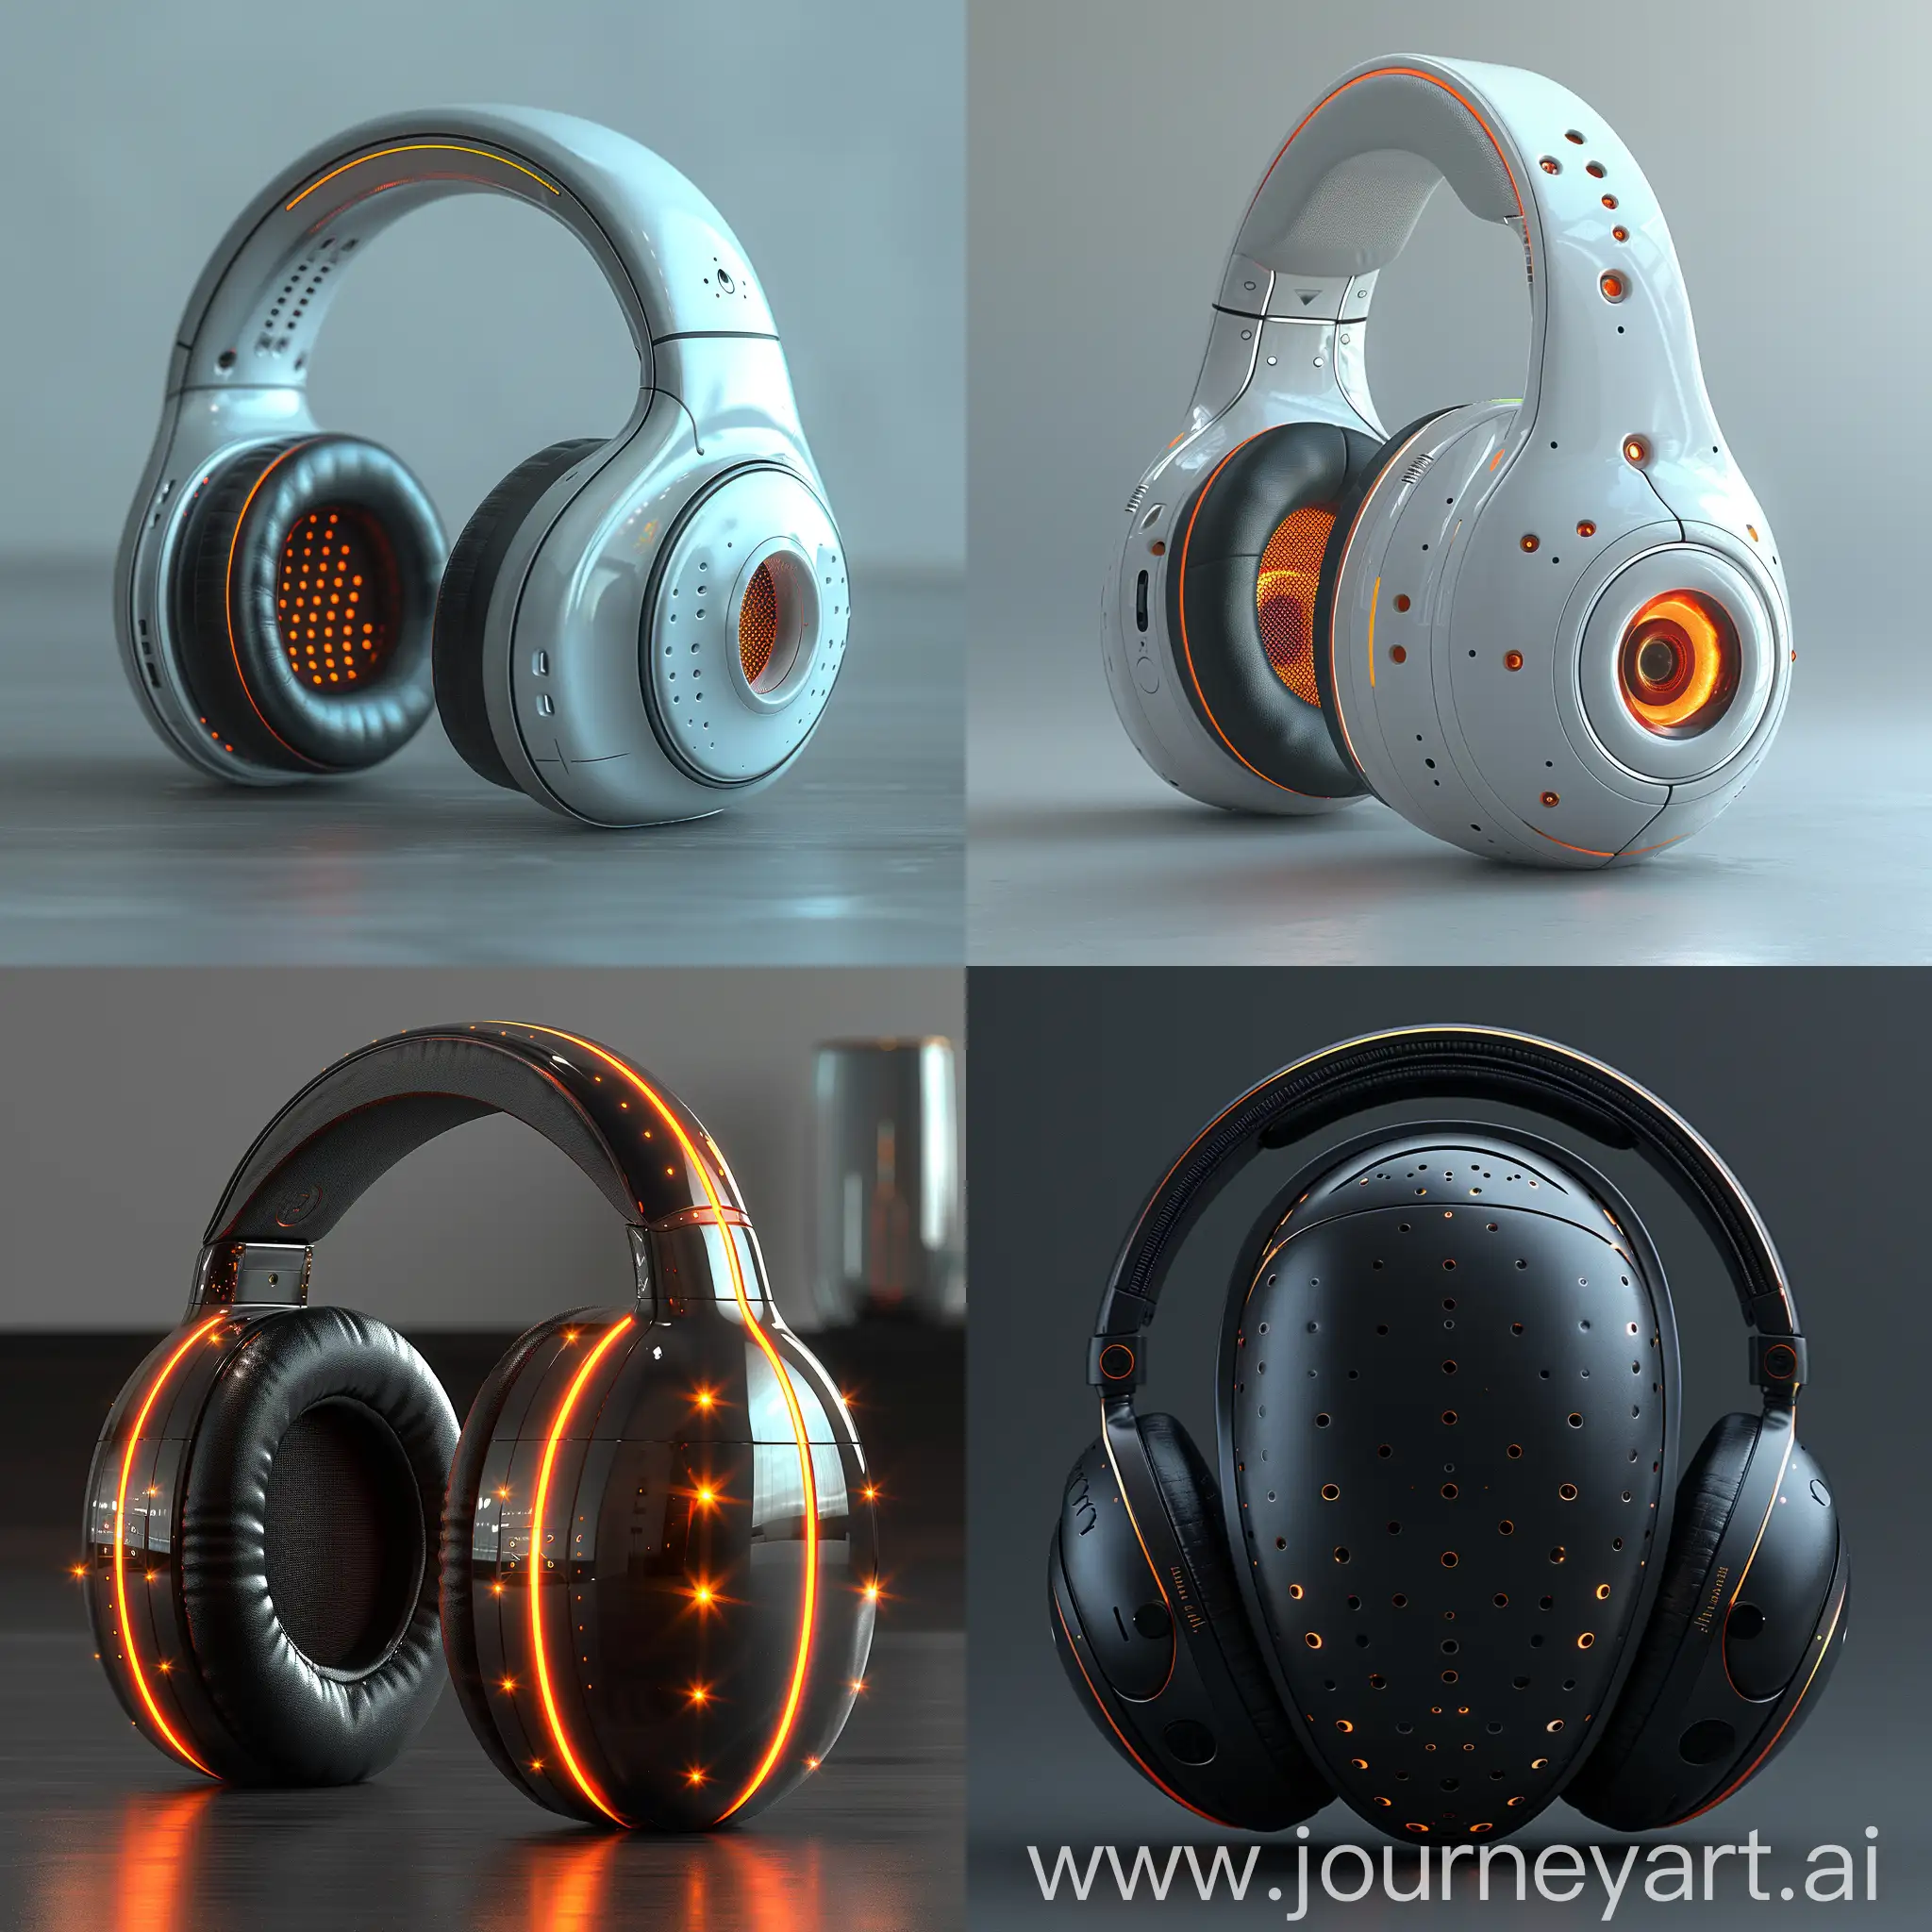 Futuristic-PC-Headphones-with-Augmented-Reality-Integration-and-Biometric-Sensors